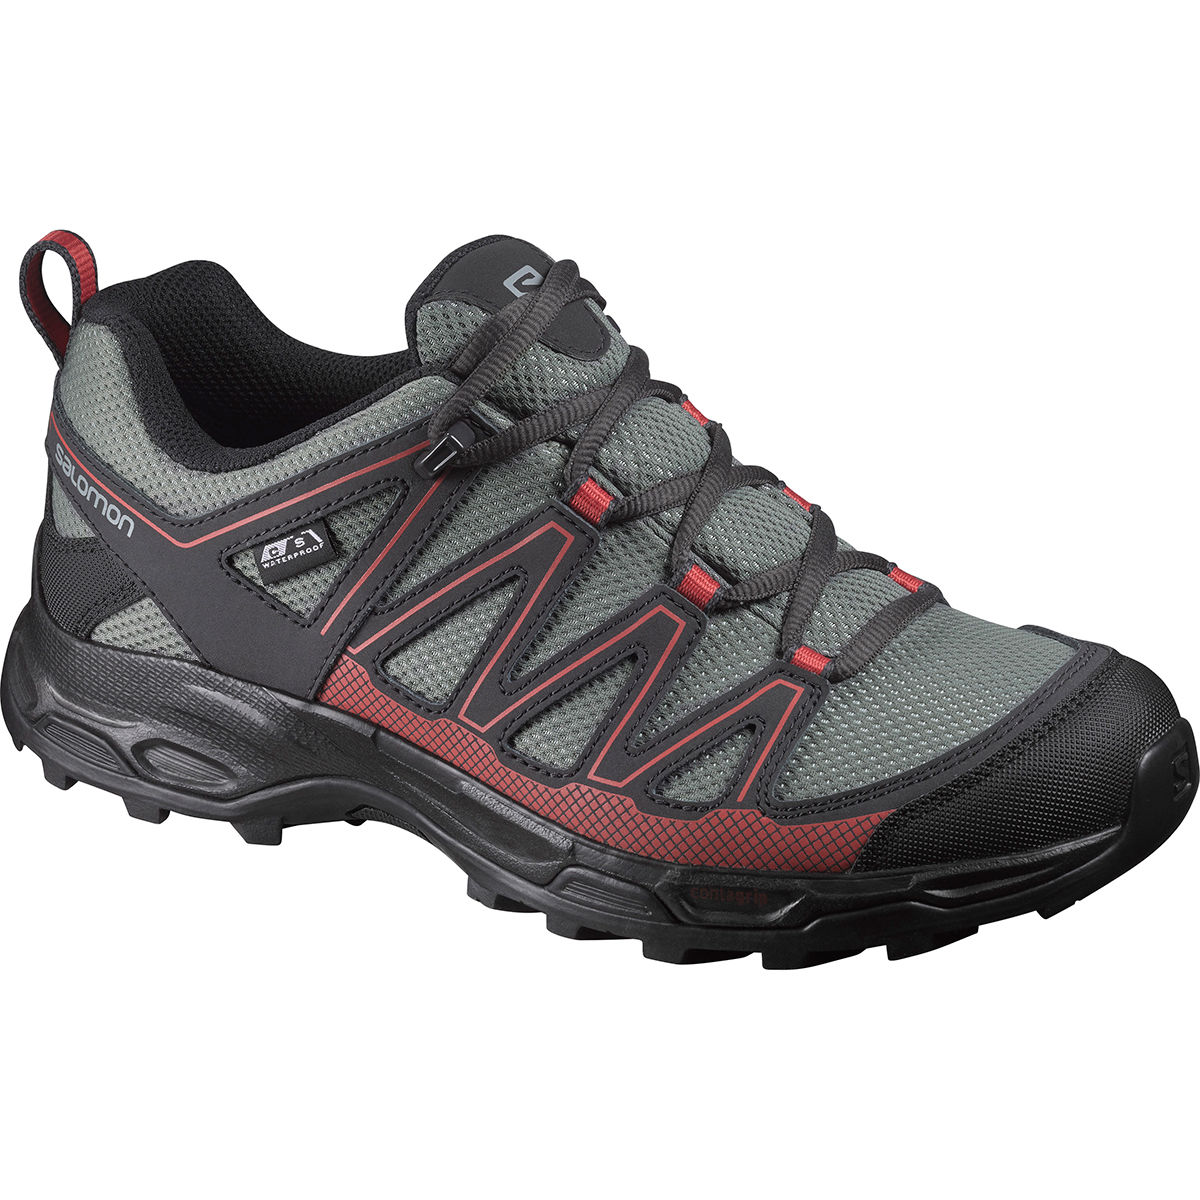 Salomon Women's Pathfinder Low Climashield Waterproof Hiking Shoes - Black, 9